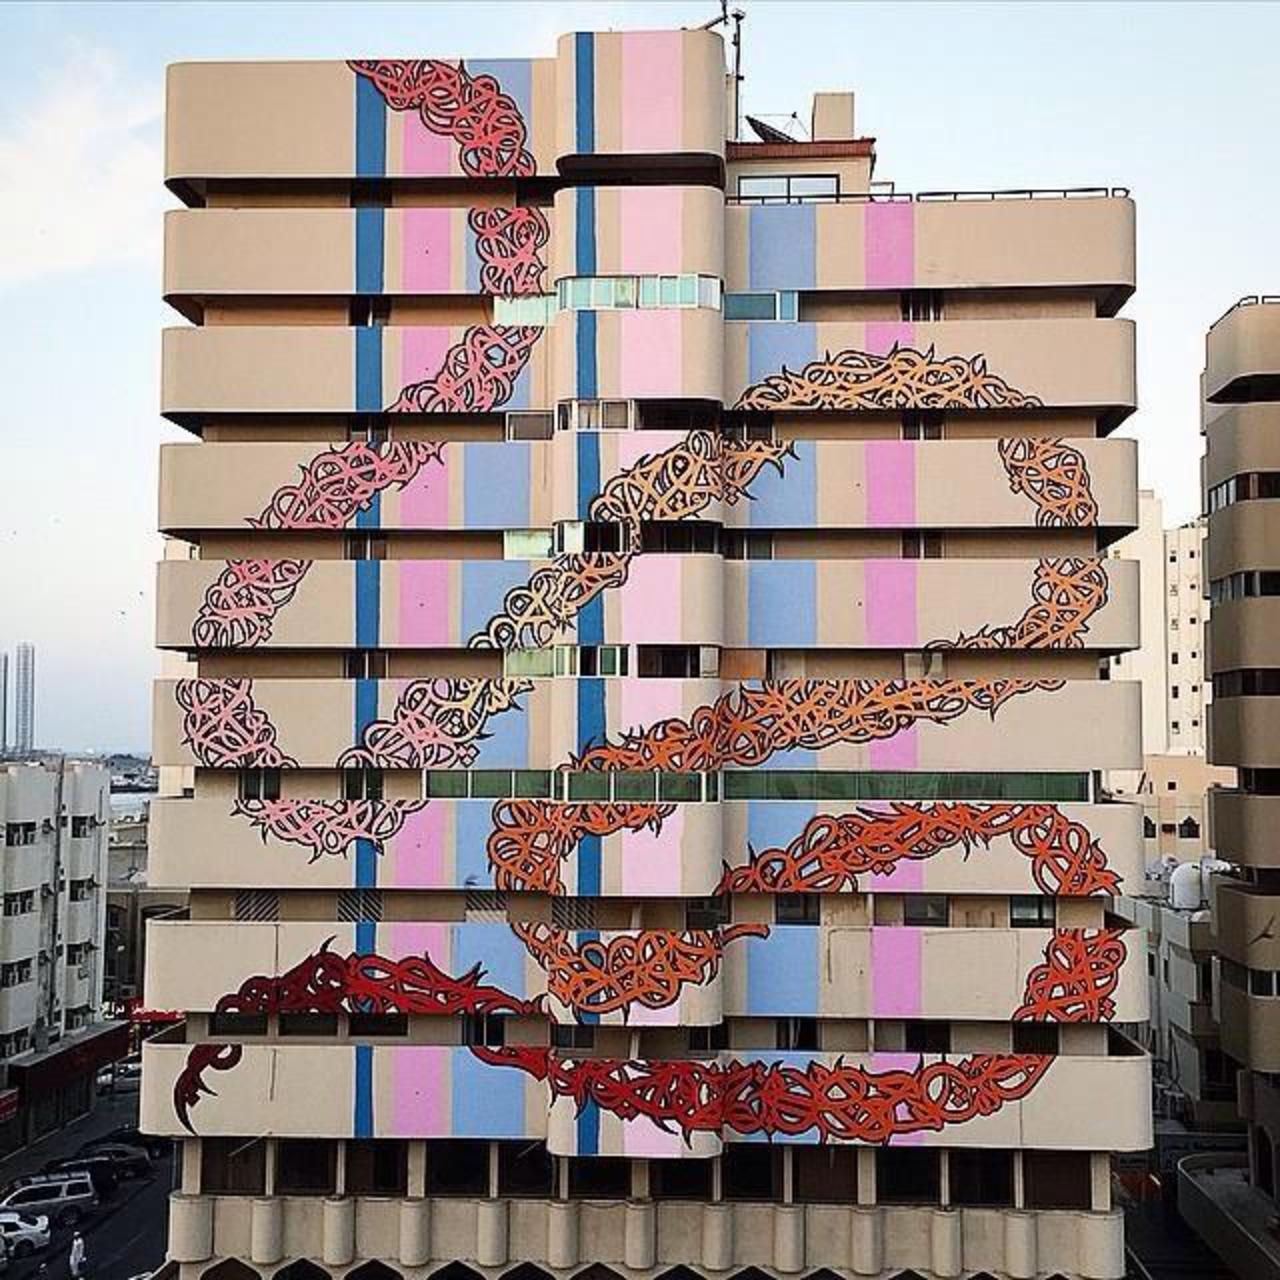 Excellent large scale Street Art mural by the artist 'eL seed'

#art #arte #graffiti #streetart http://t.co/ykfnxihd9m